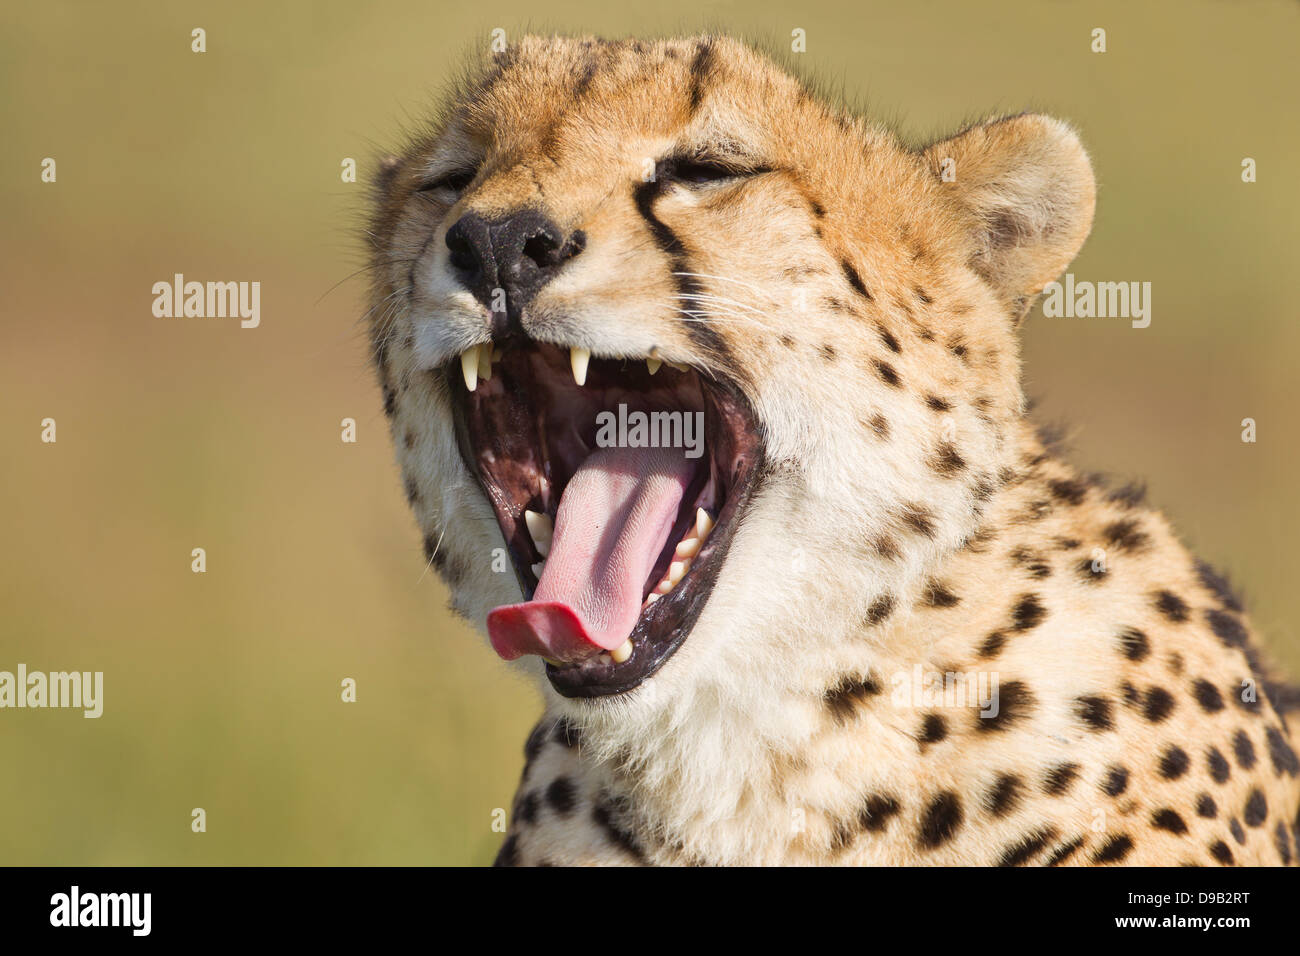 Yawning cheetah closeup portrait, Masai Mara, Kenya Stock Photo